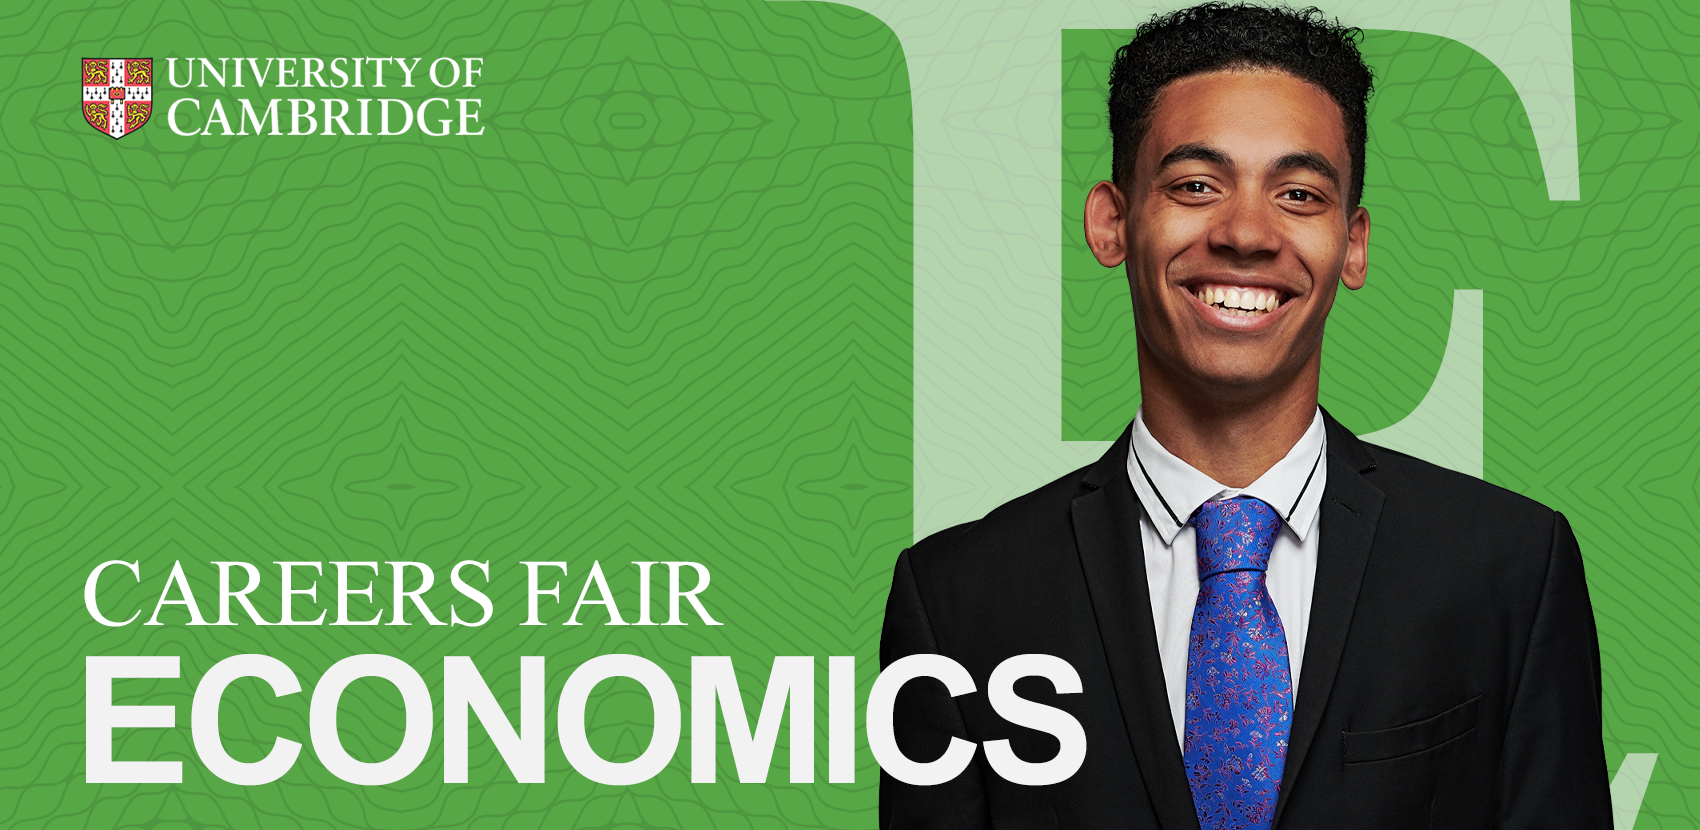 Economics fair banner